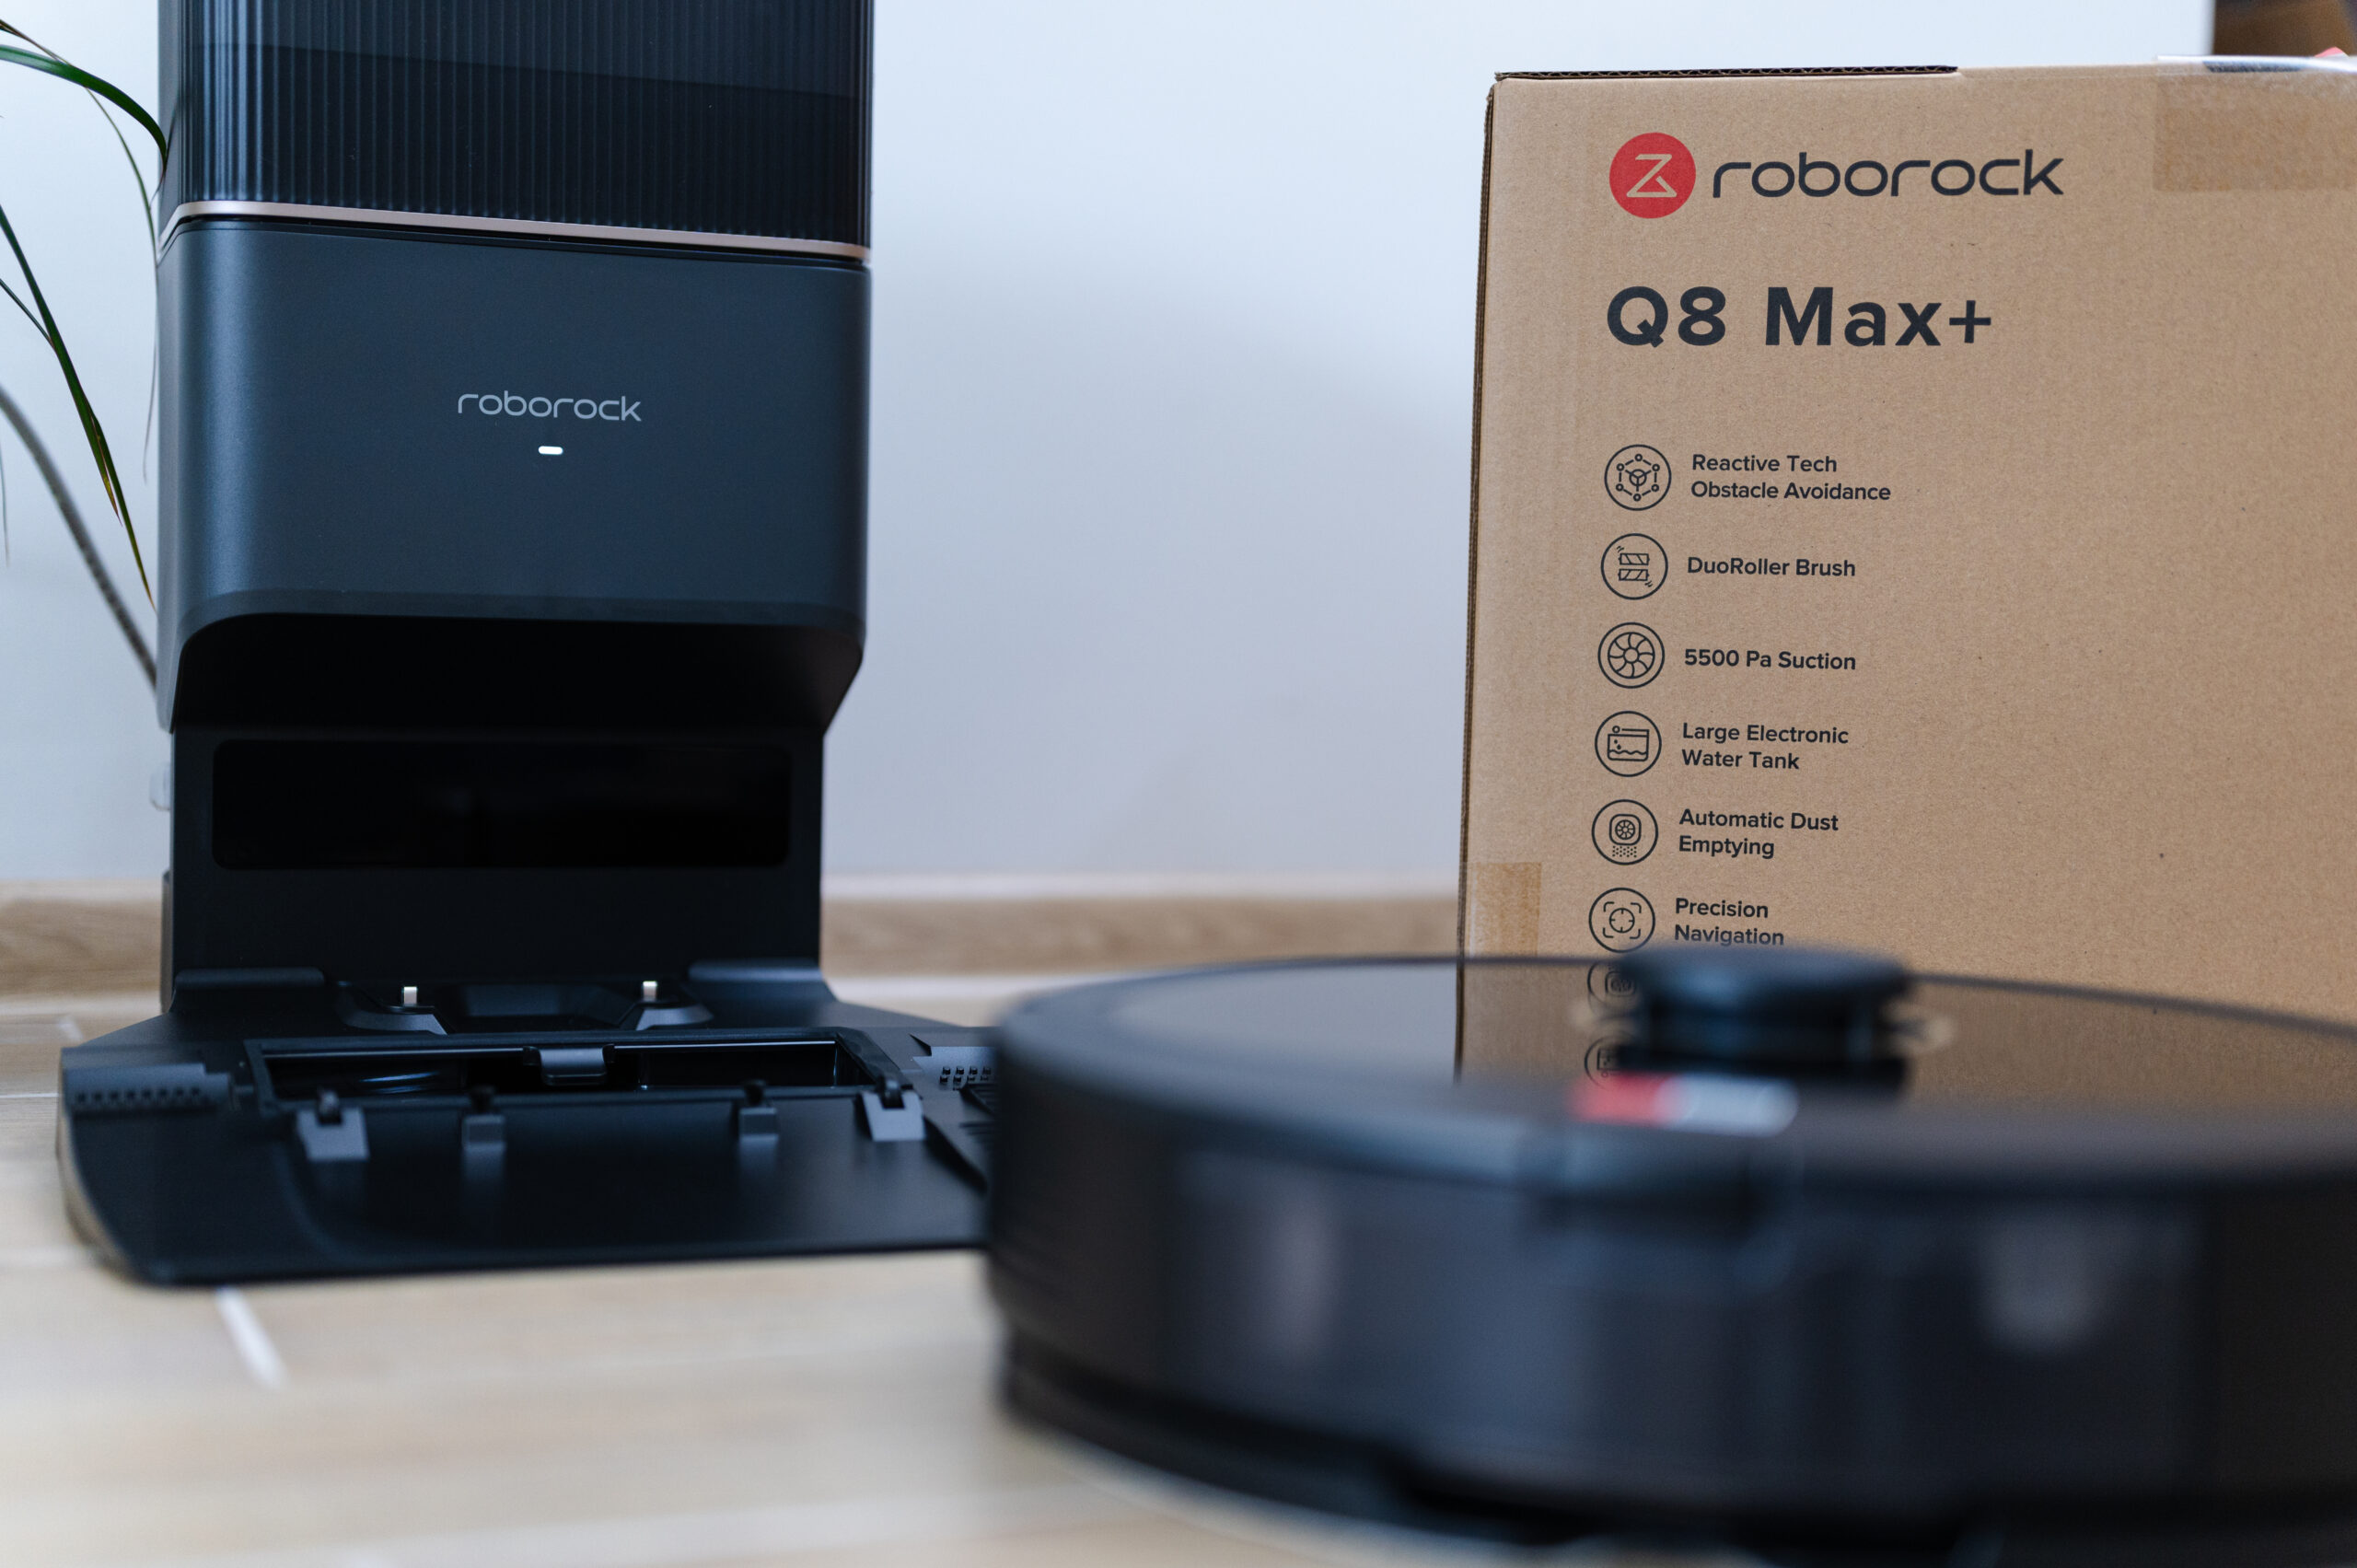 Roborock Q8 Max series has advanced obstacle avoidance